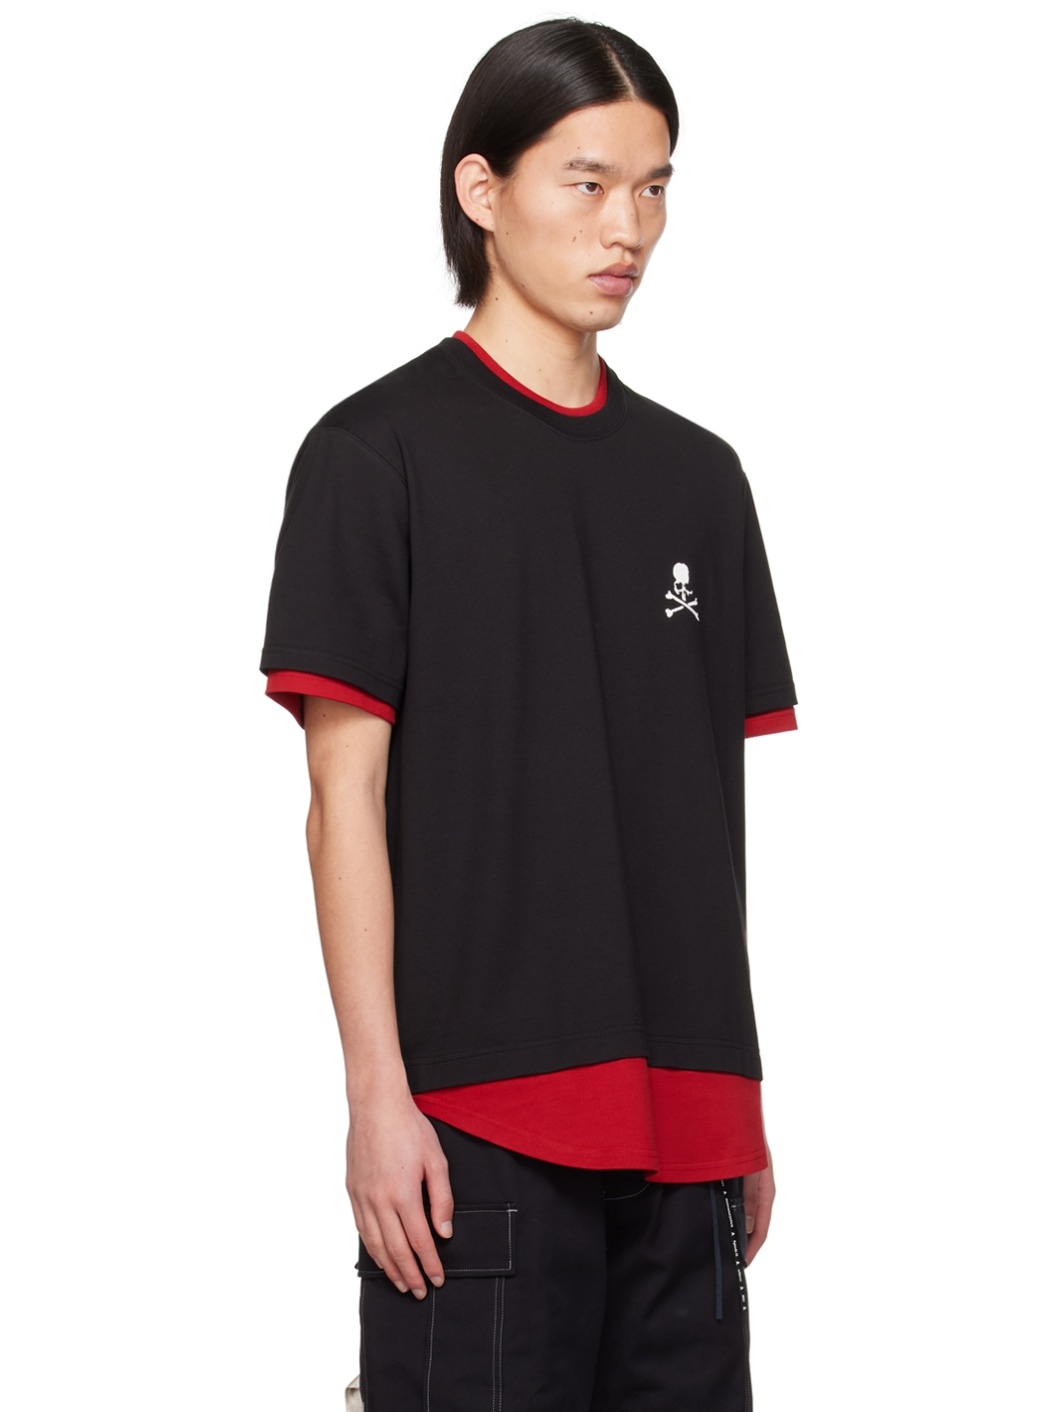 Black & Red Layered T-Shirt - 2